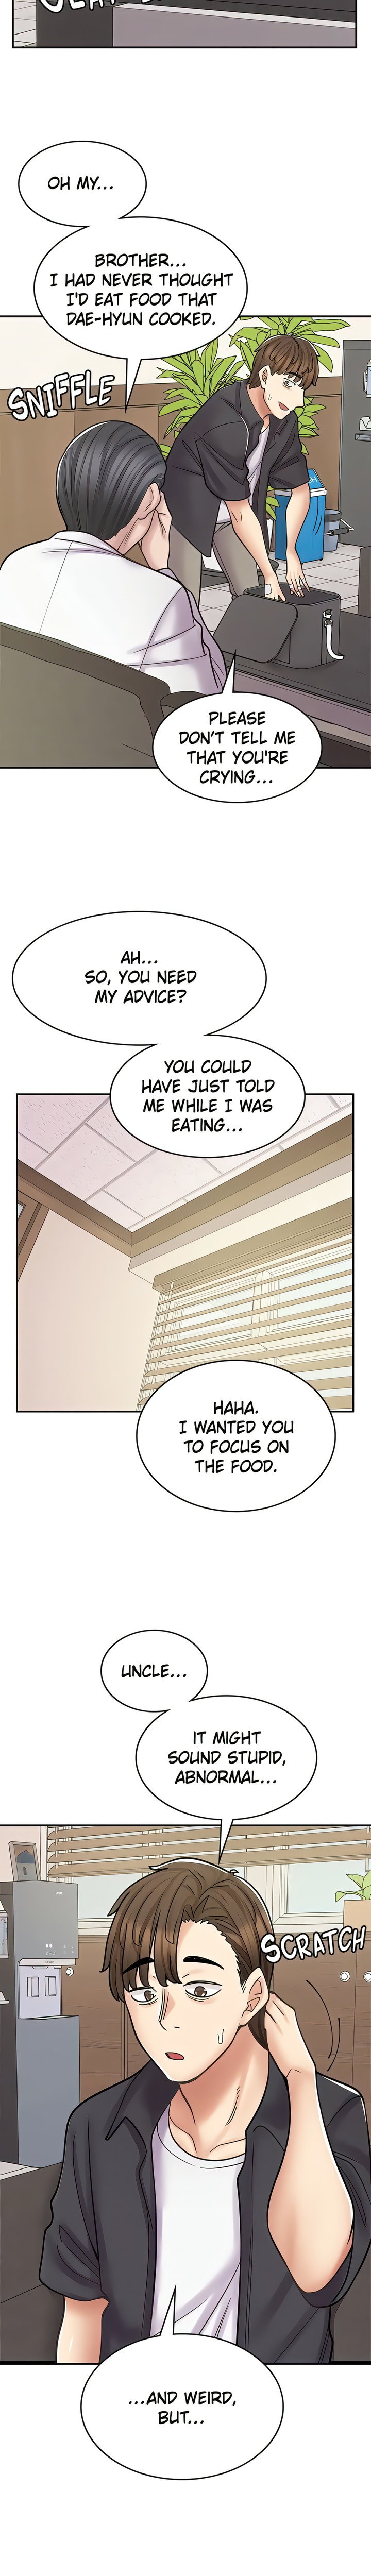 Erotic Manga Café Girls - Chapter 52 Page 3